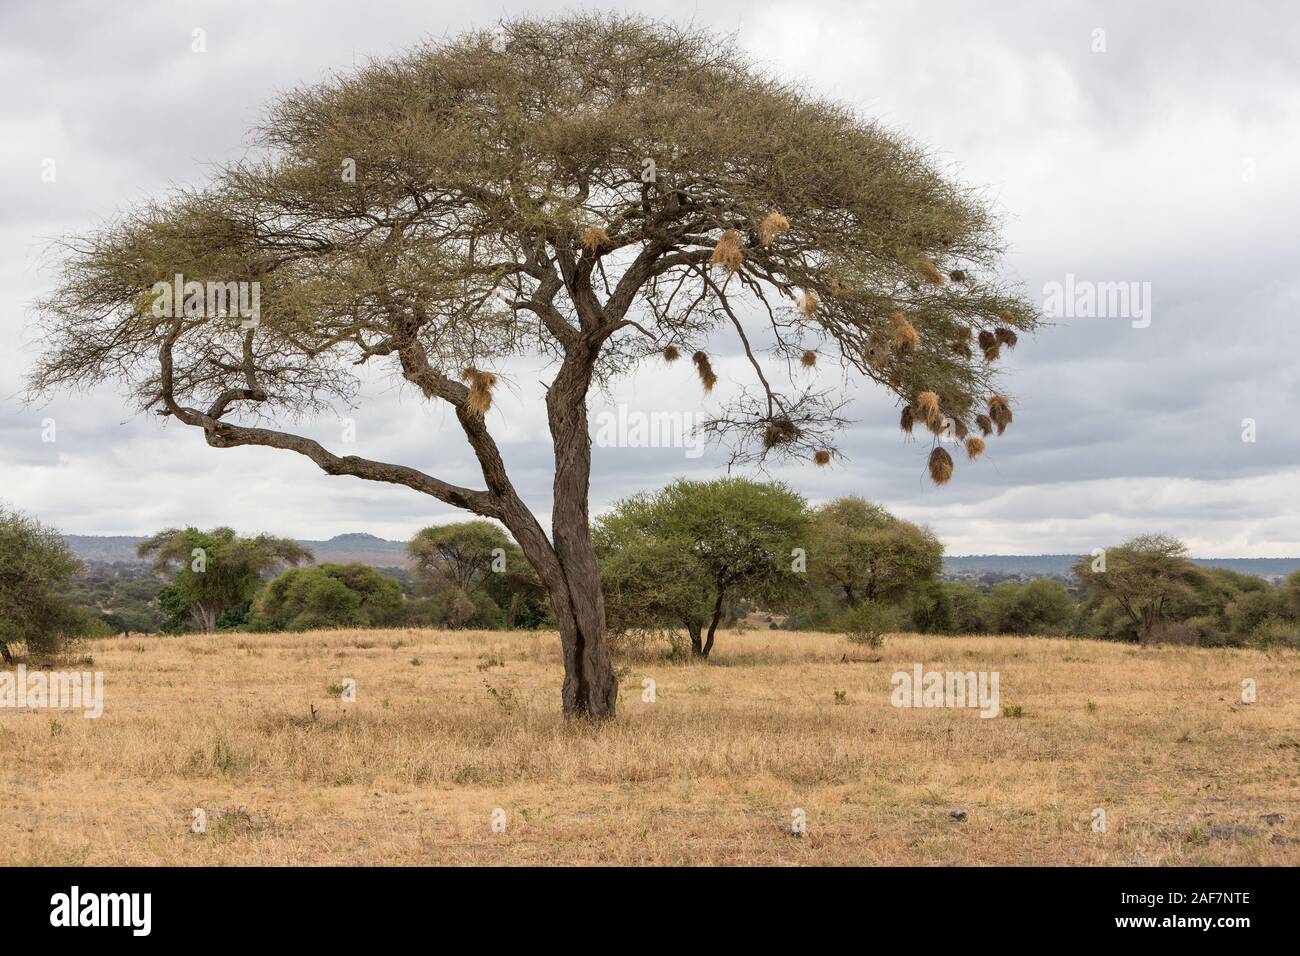 Tanzania. Tarangire National Park. Nests of the Rufous-tailed Weaver in Tree. Stock Photo